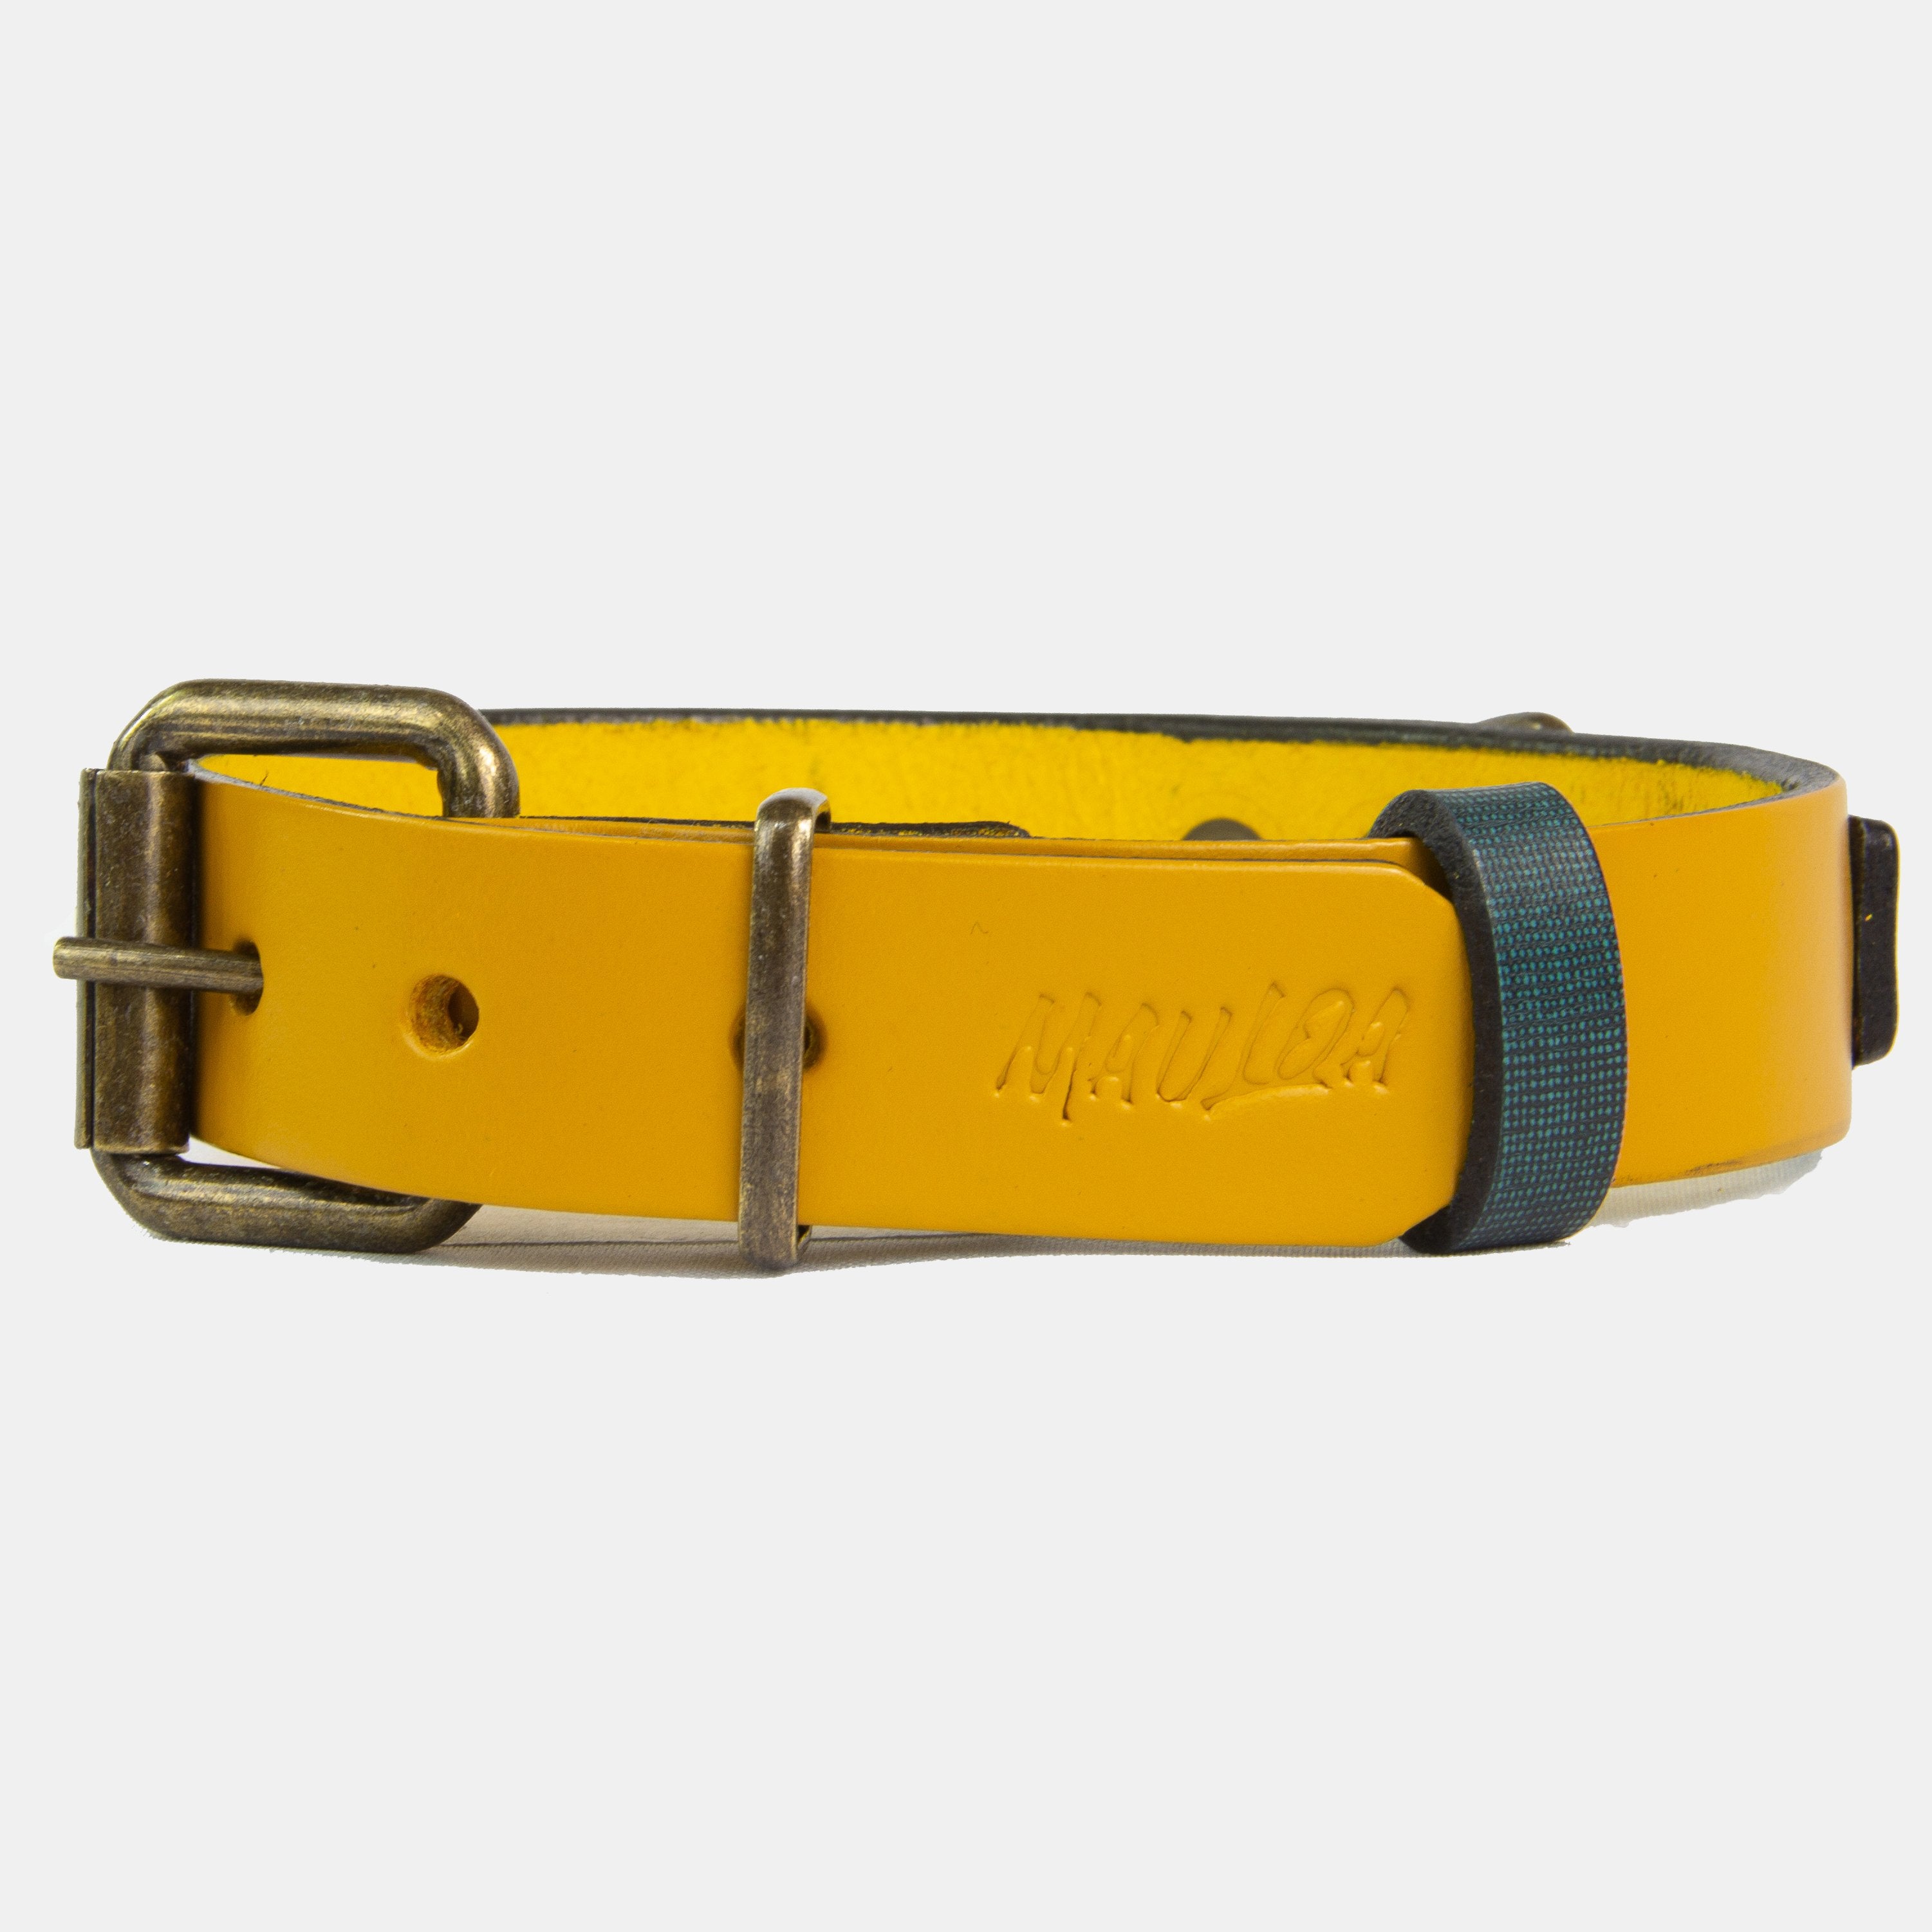 Collar para perros Mauloa, hecho en cuero, modelo Duke, color Amarillo con Jeans